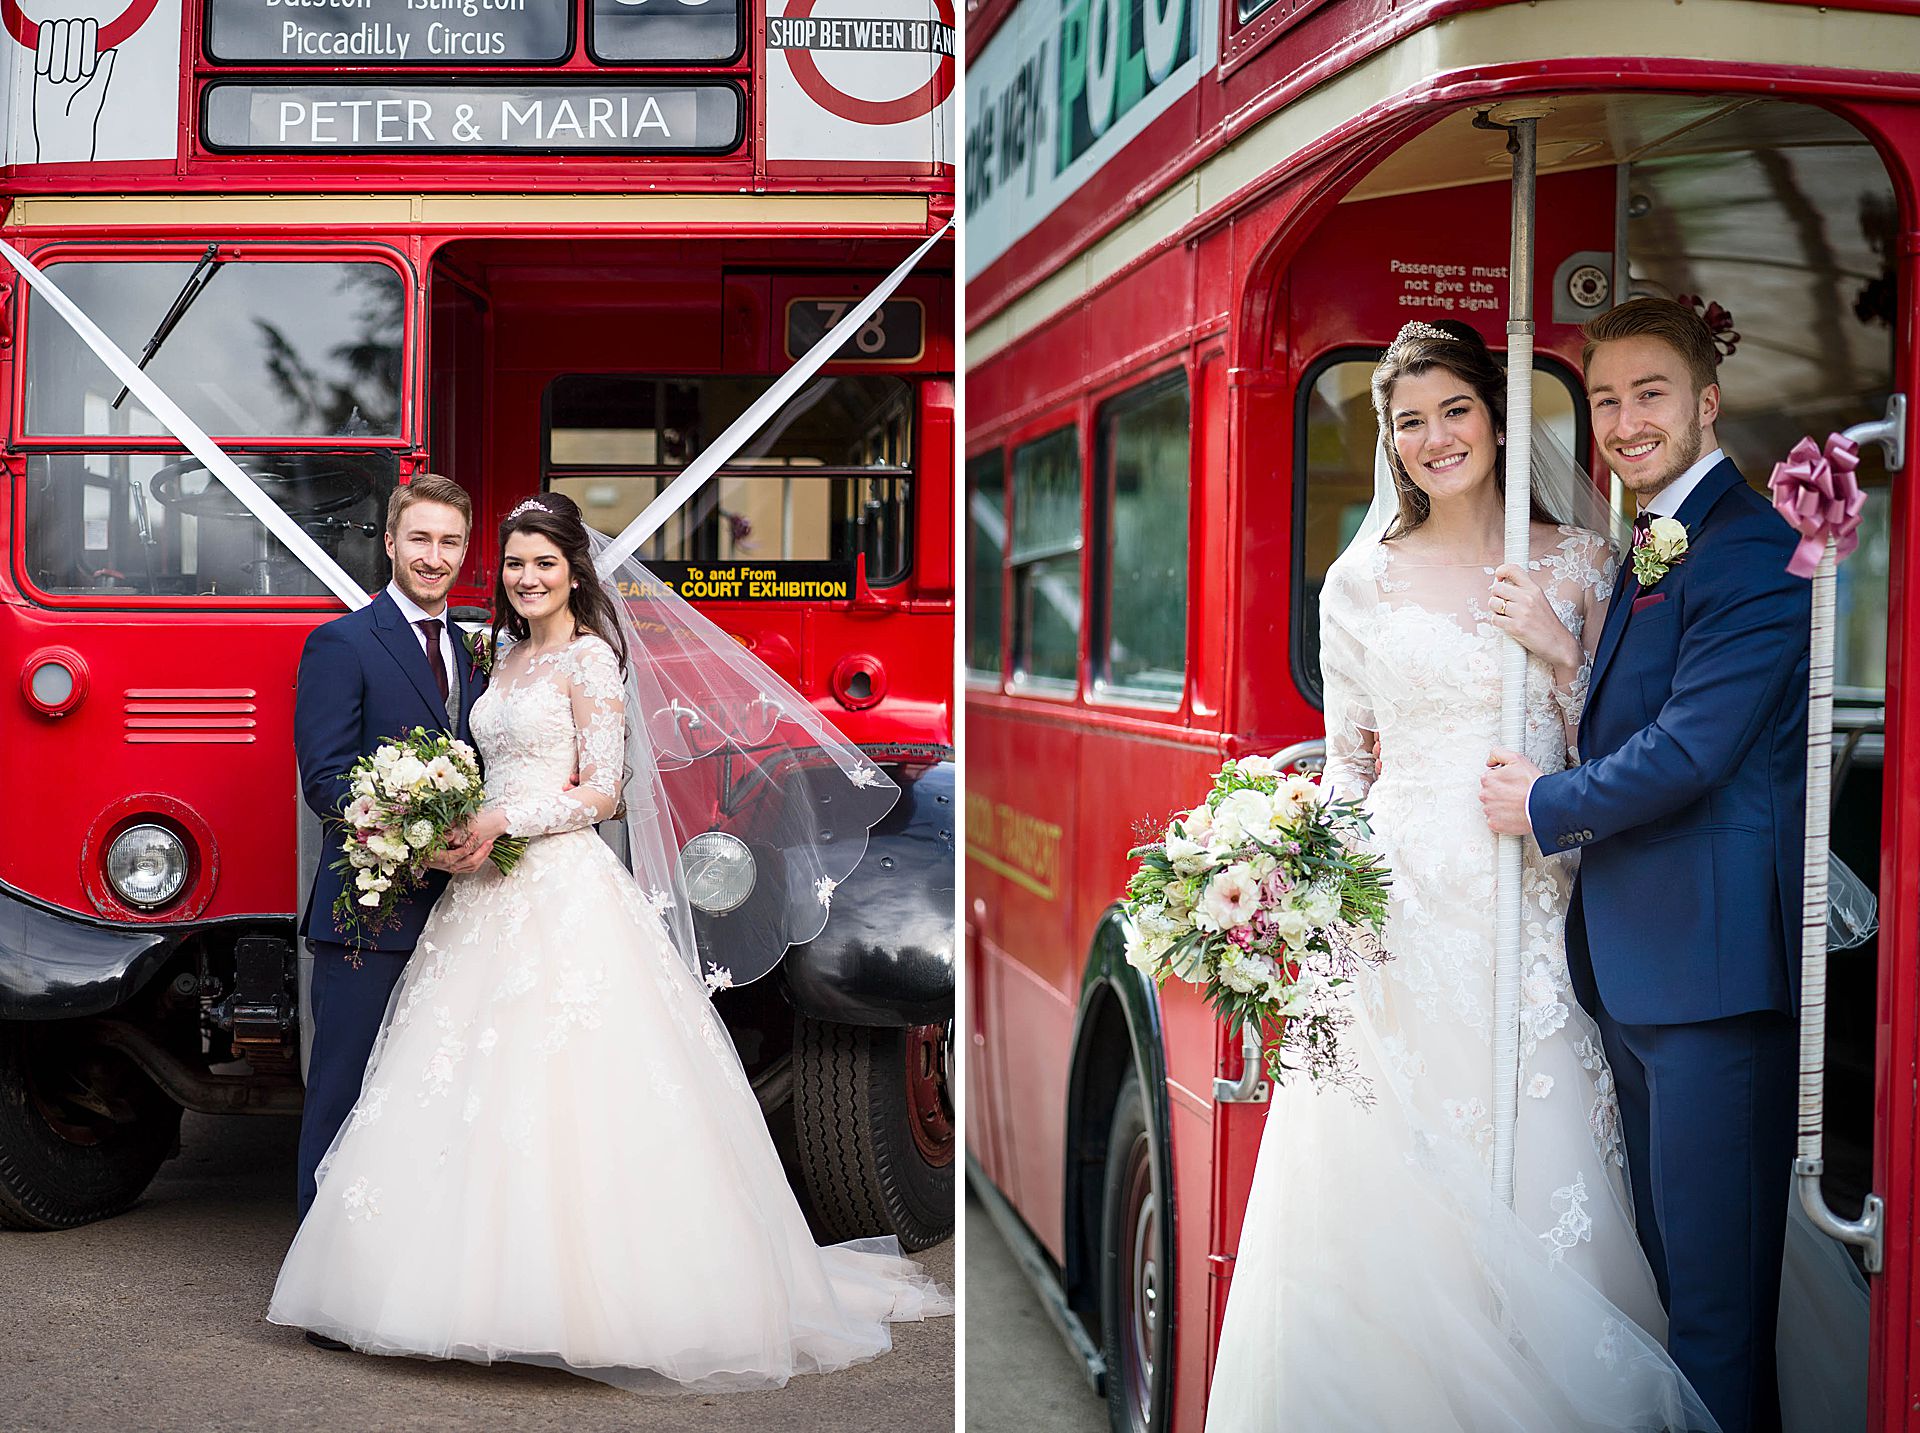 the wedding bus